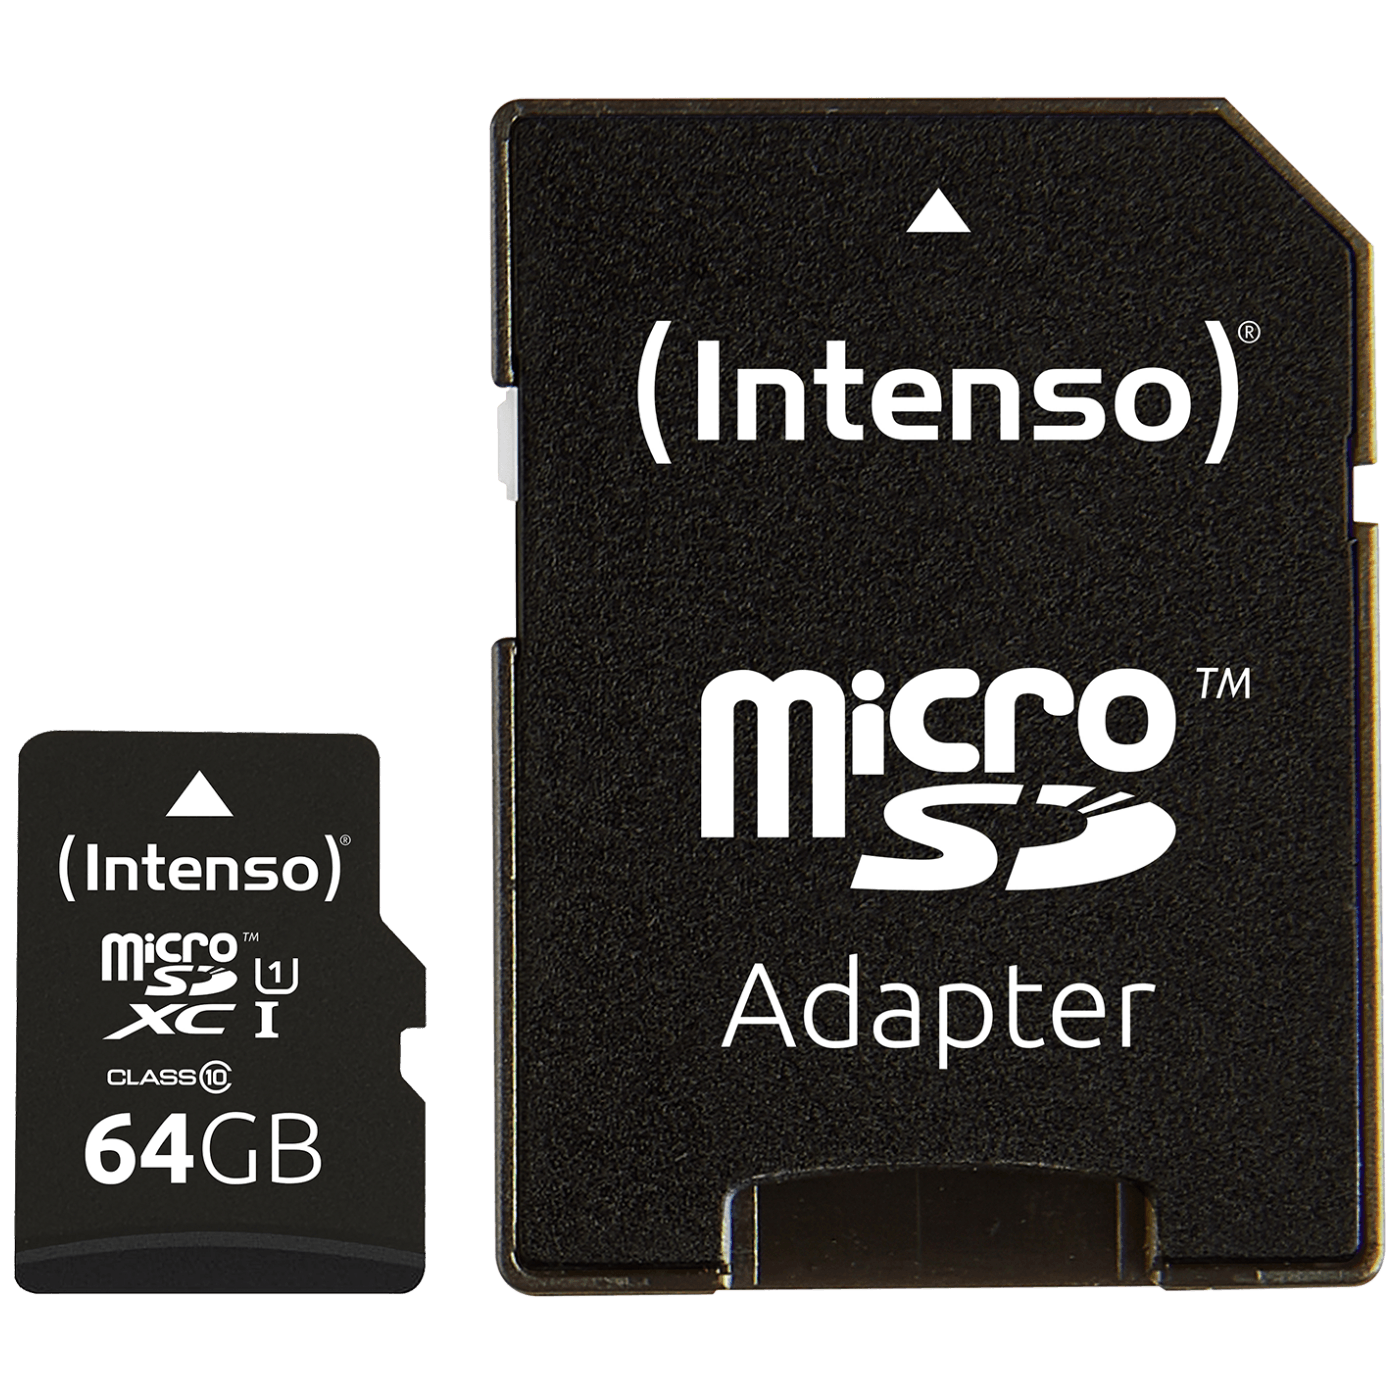 MicroSD 64GB Class10 UHS-I Pro